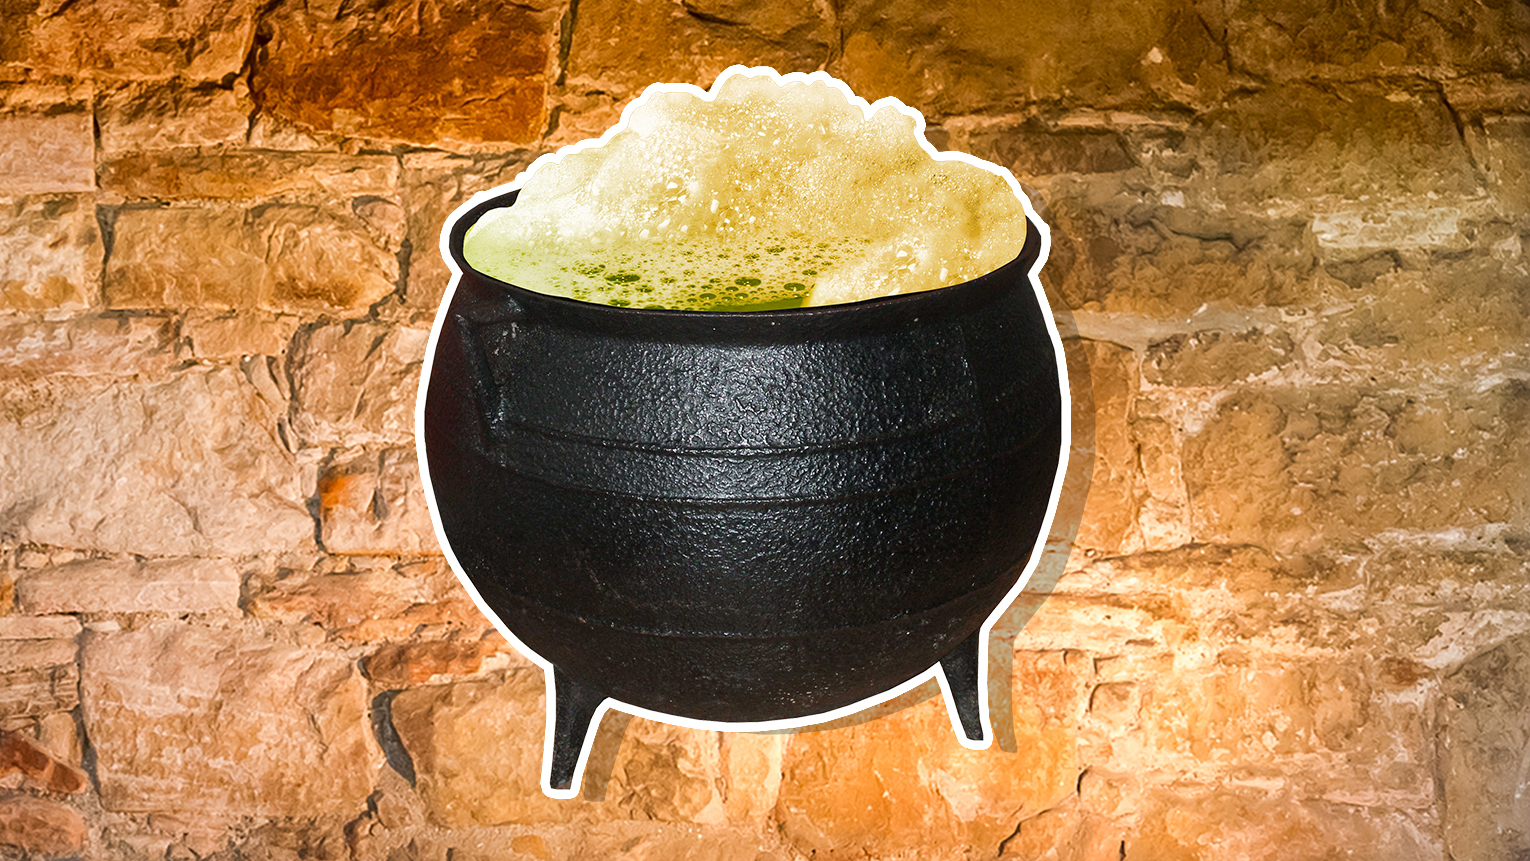 A cauldron